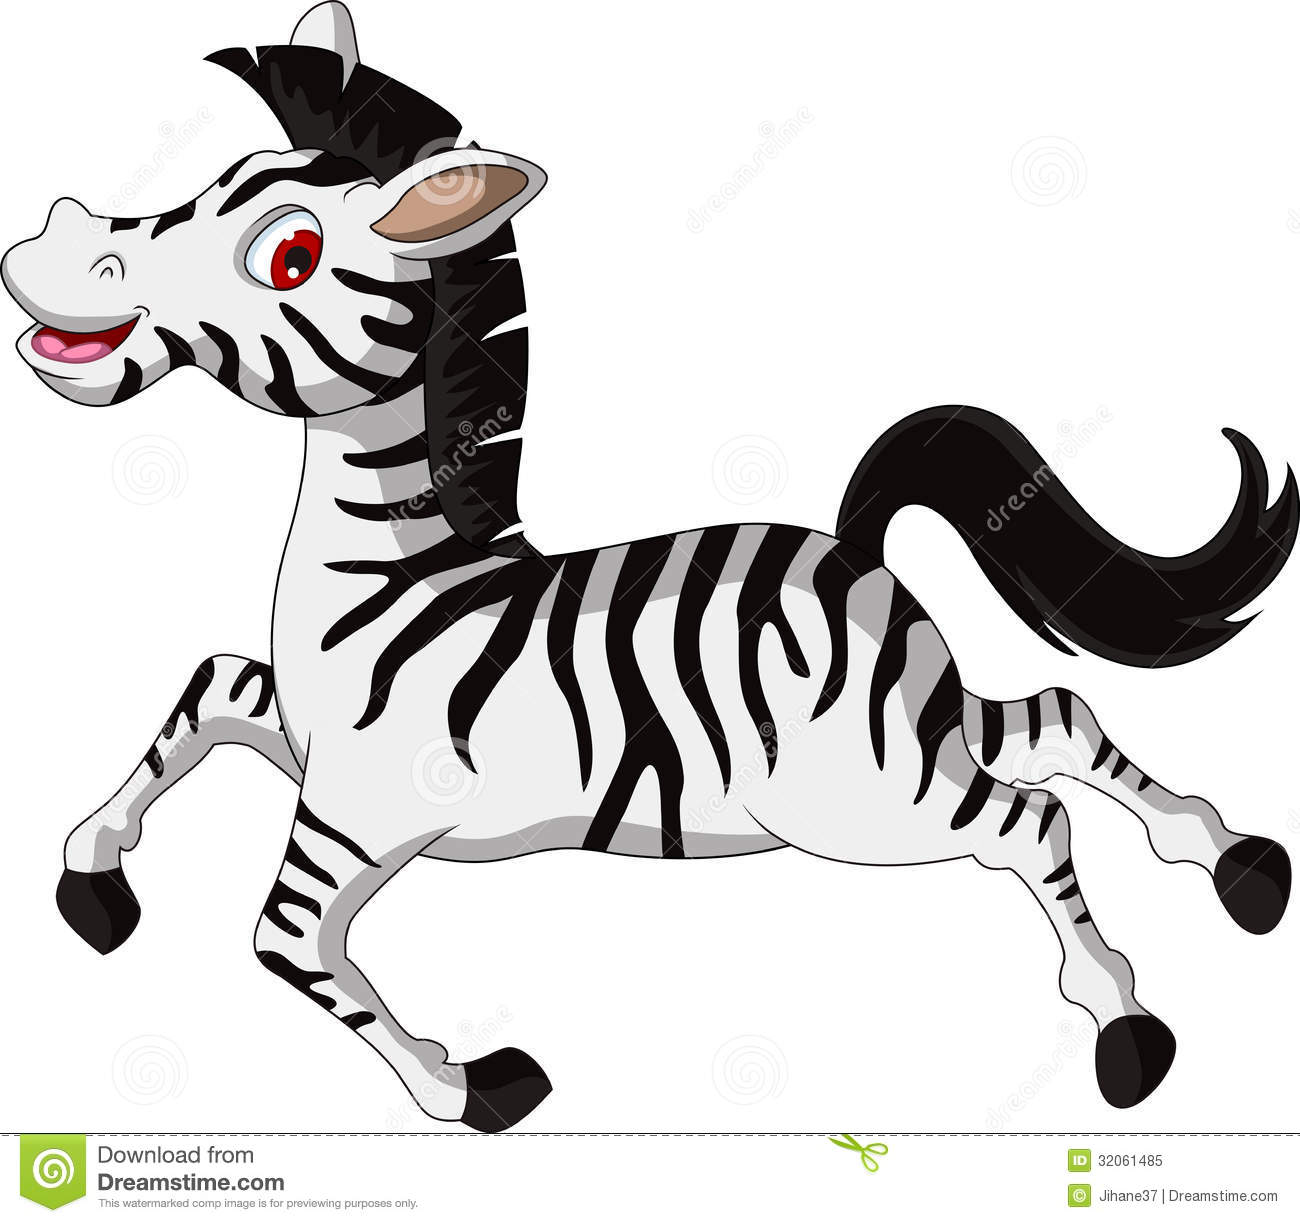 Funny Running Zebra Cartoon Royalty Free Stock Photo   Image  32061485